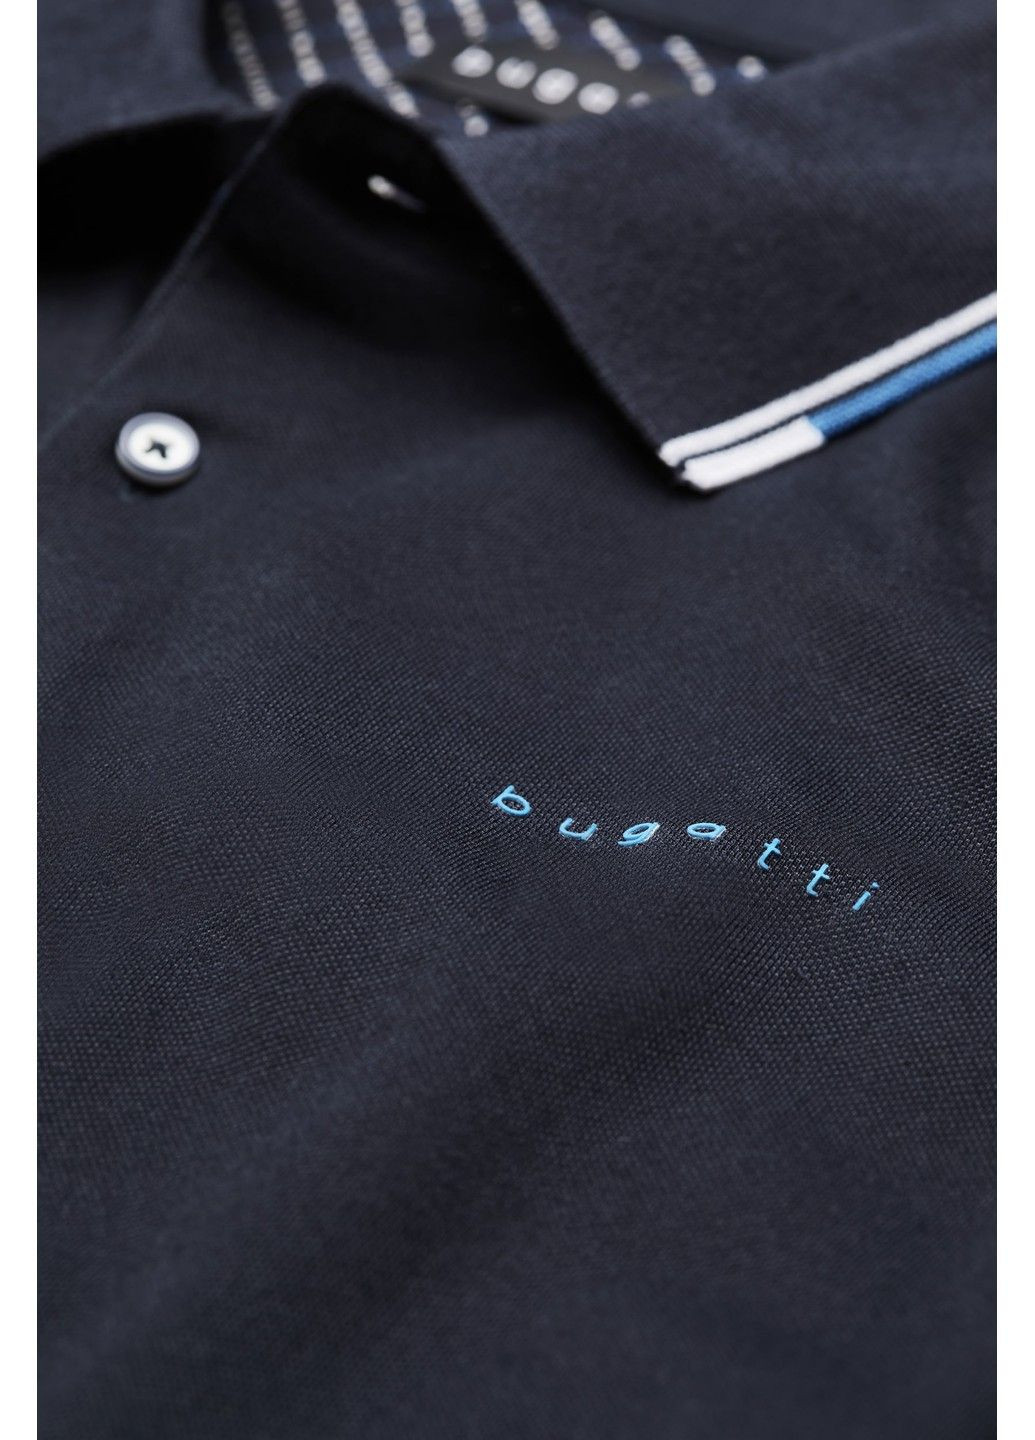 Темно-синяя футболка-мужское поло темно-синий для мужчин Bugatti в полоску